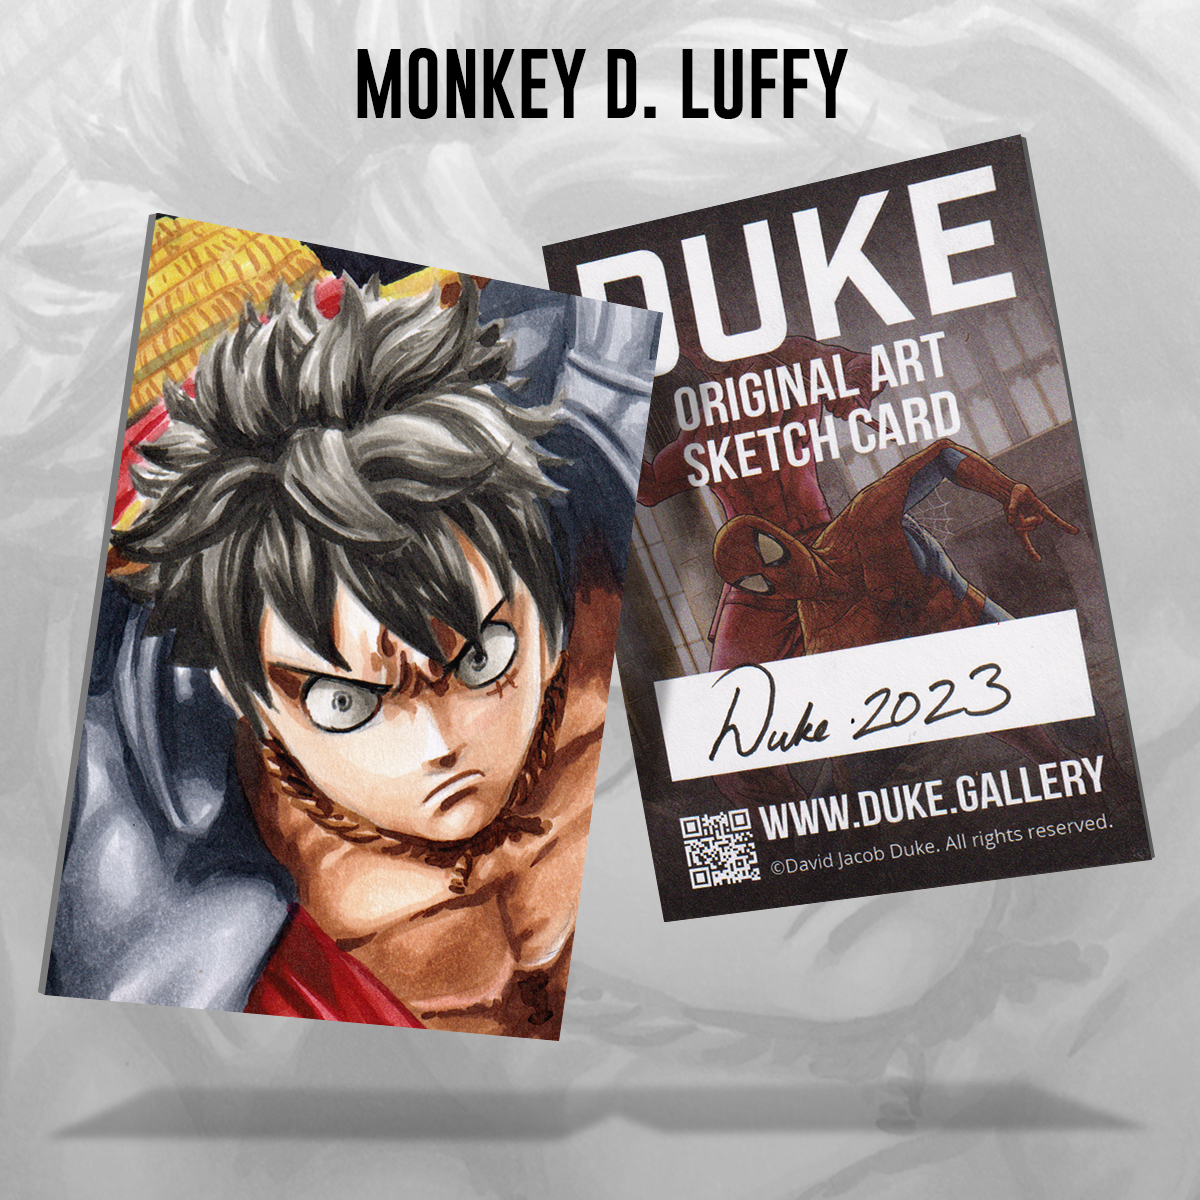 One Peace Monkey D. Luffy Sketch Card by Duke